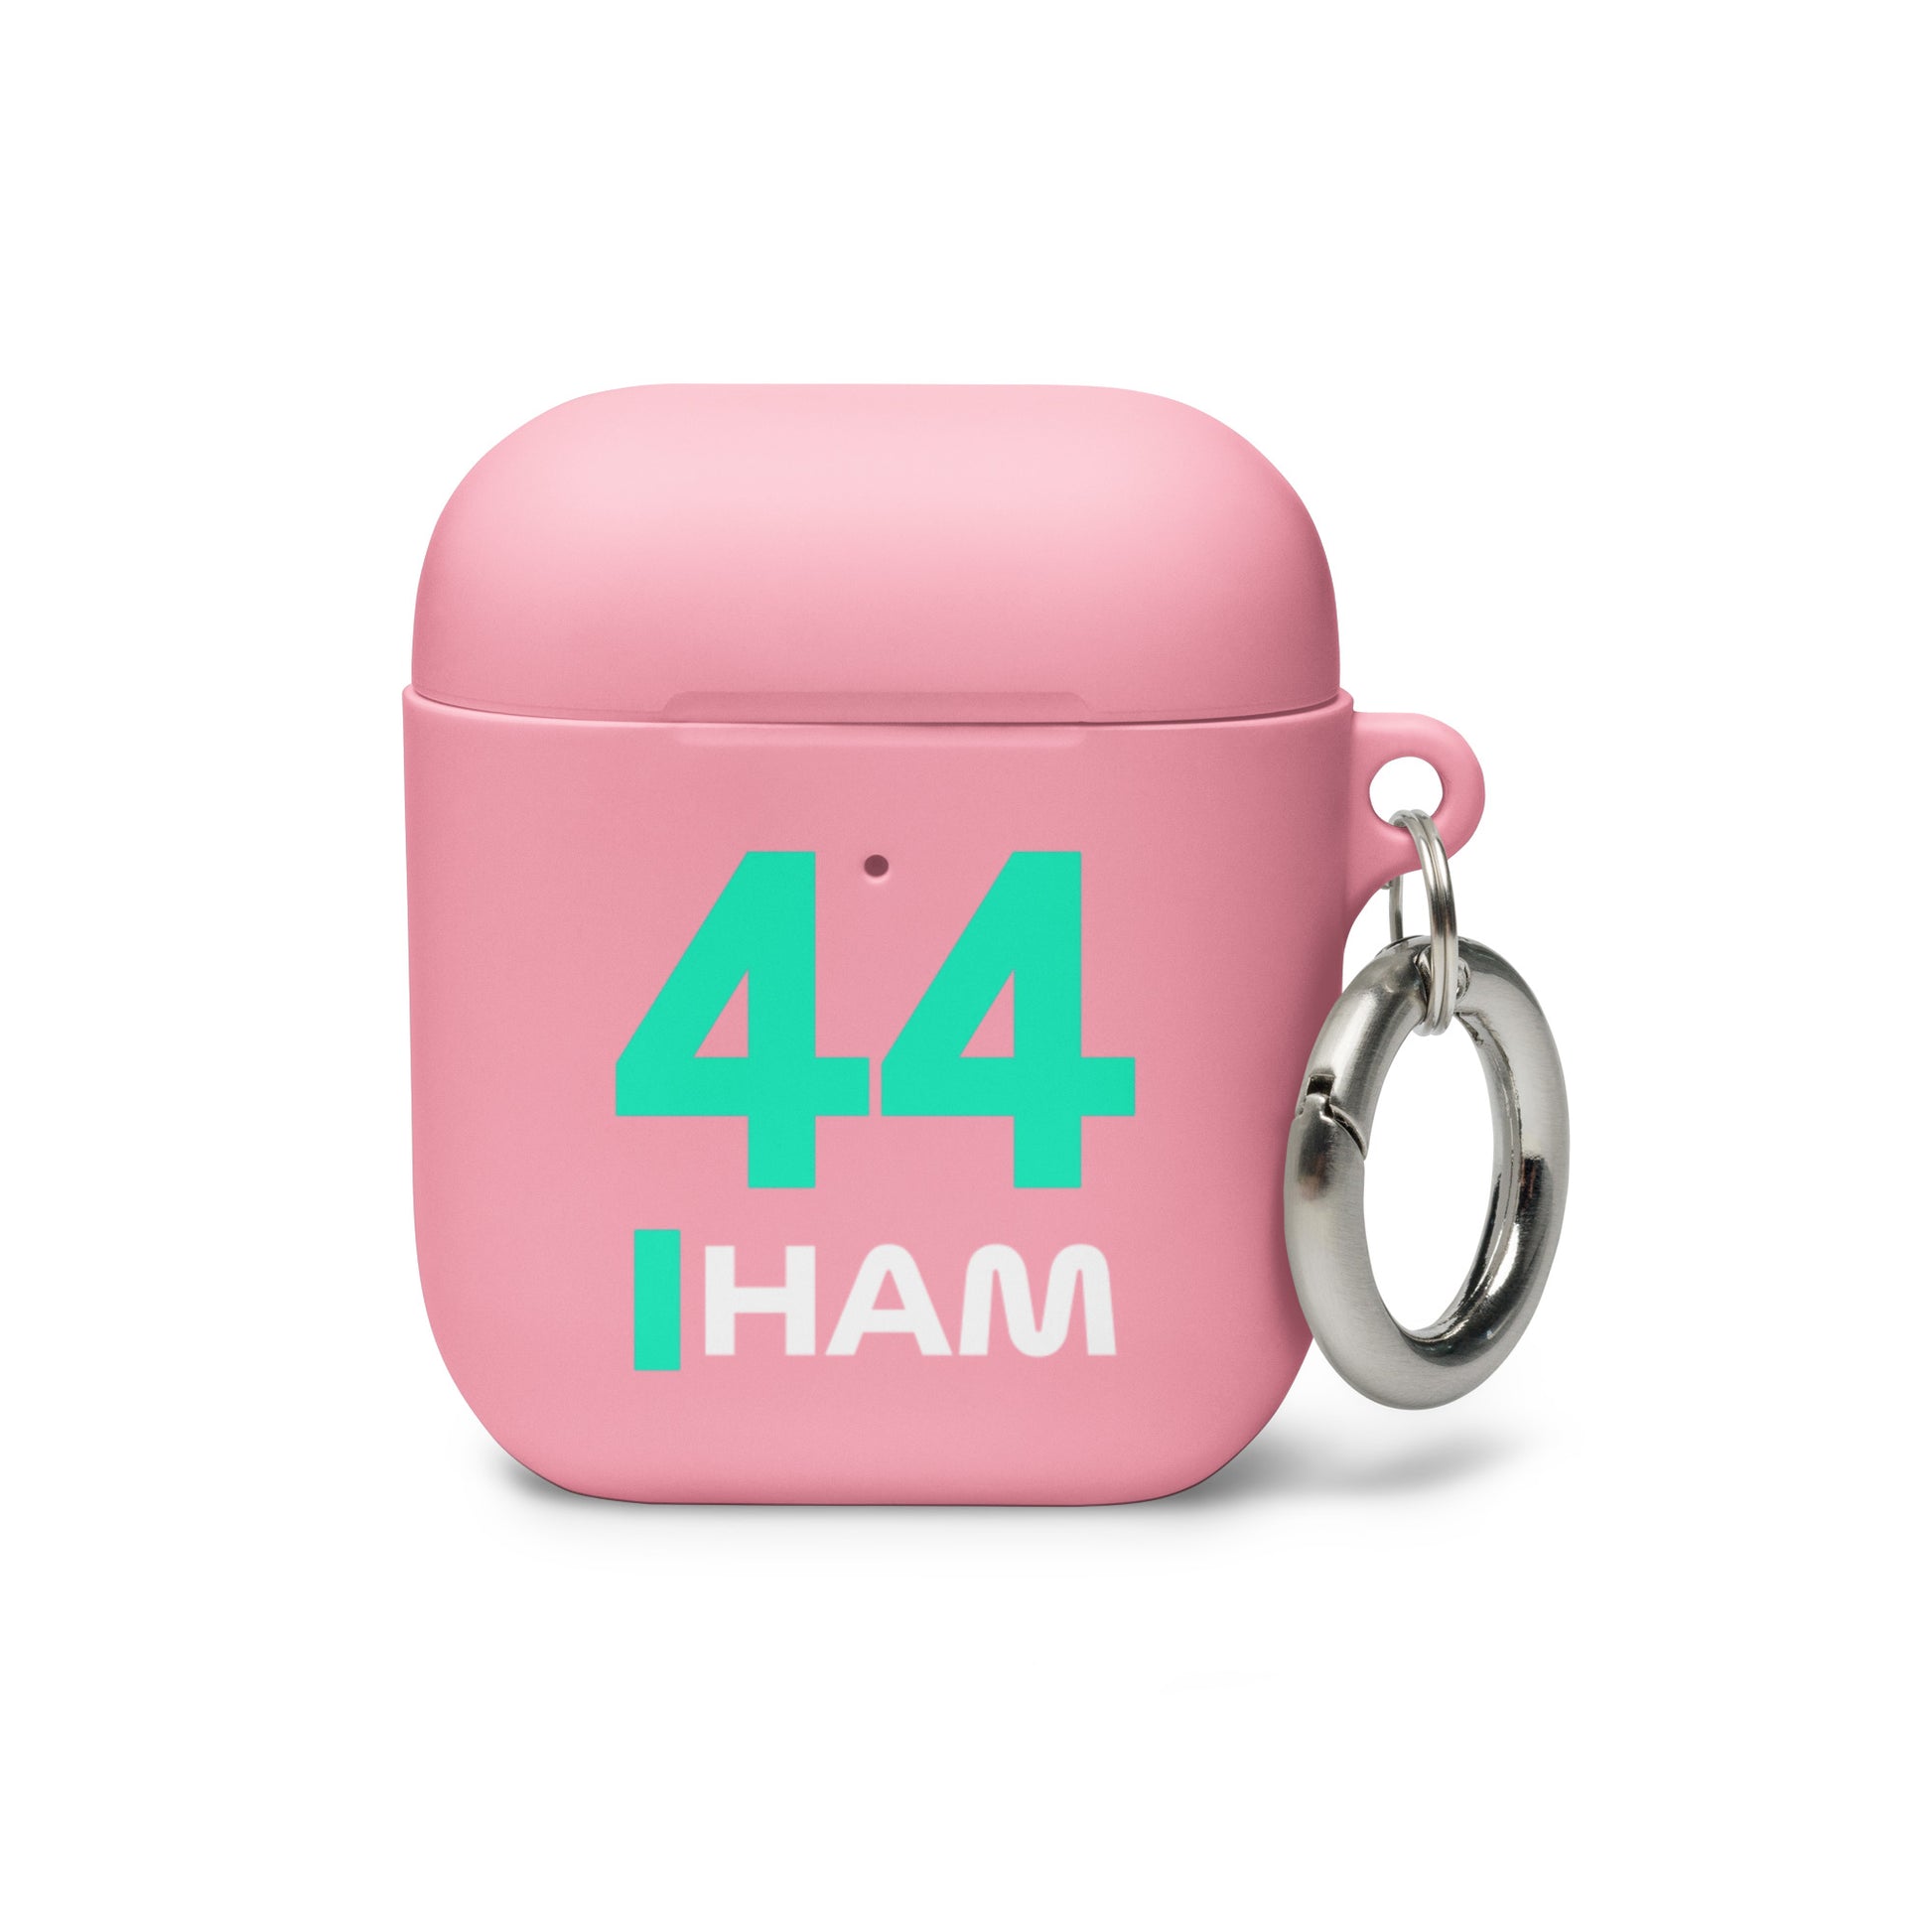 Lewis Hamilton AirPods Case pink